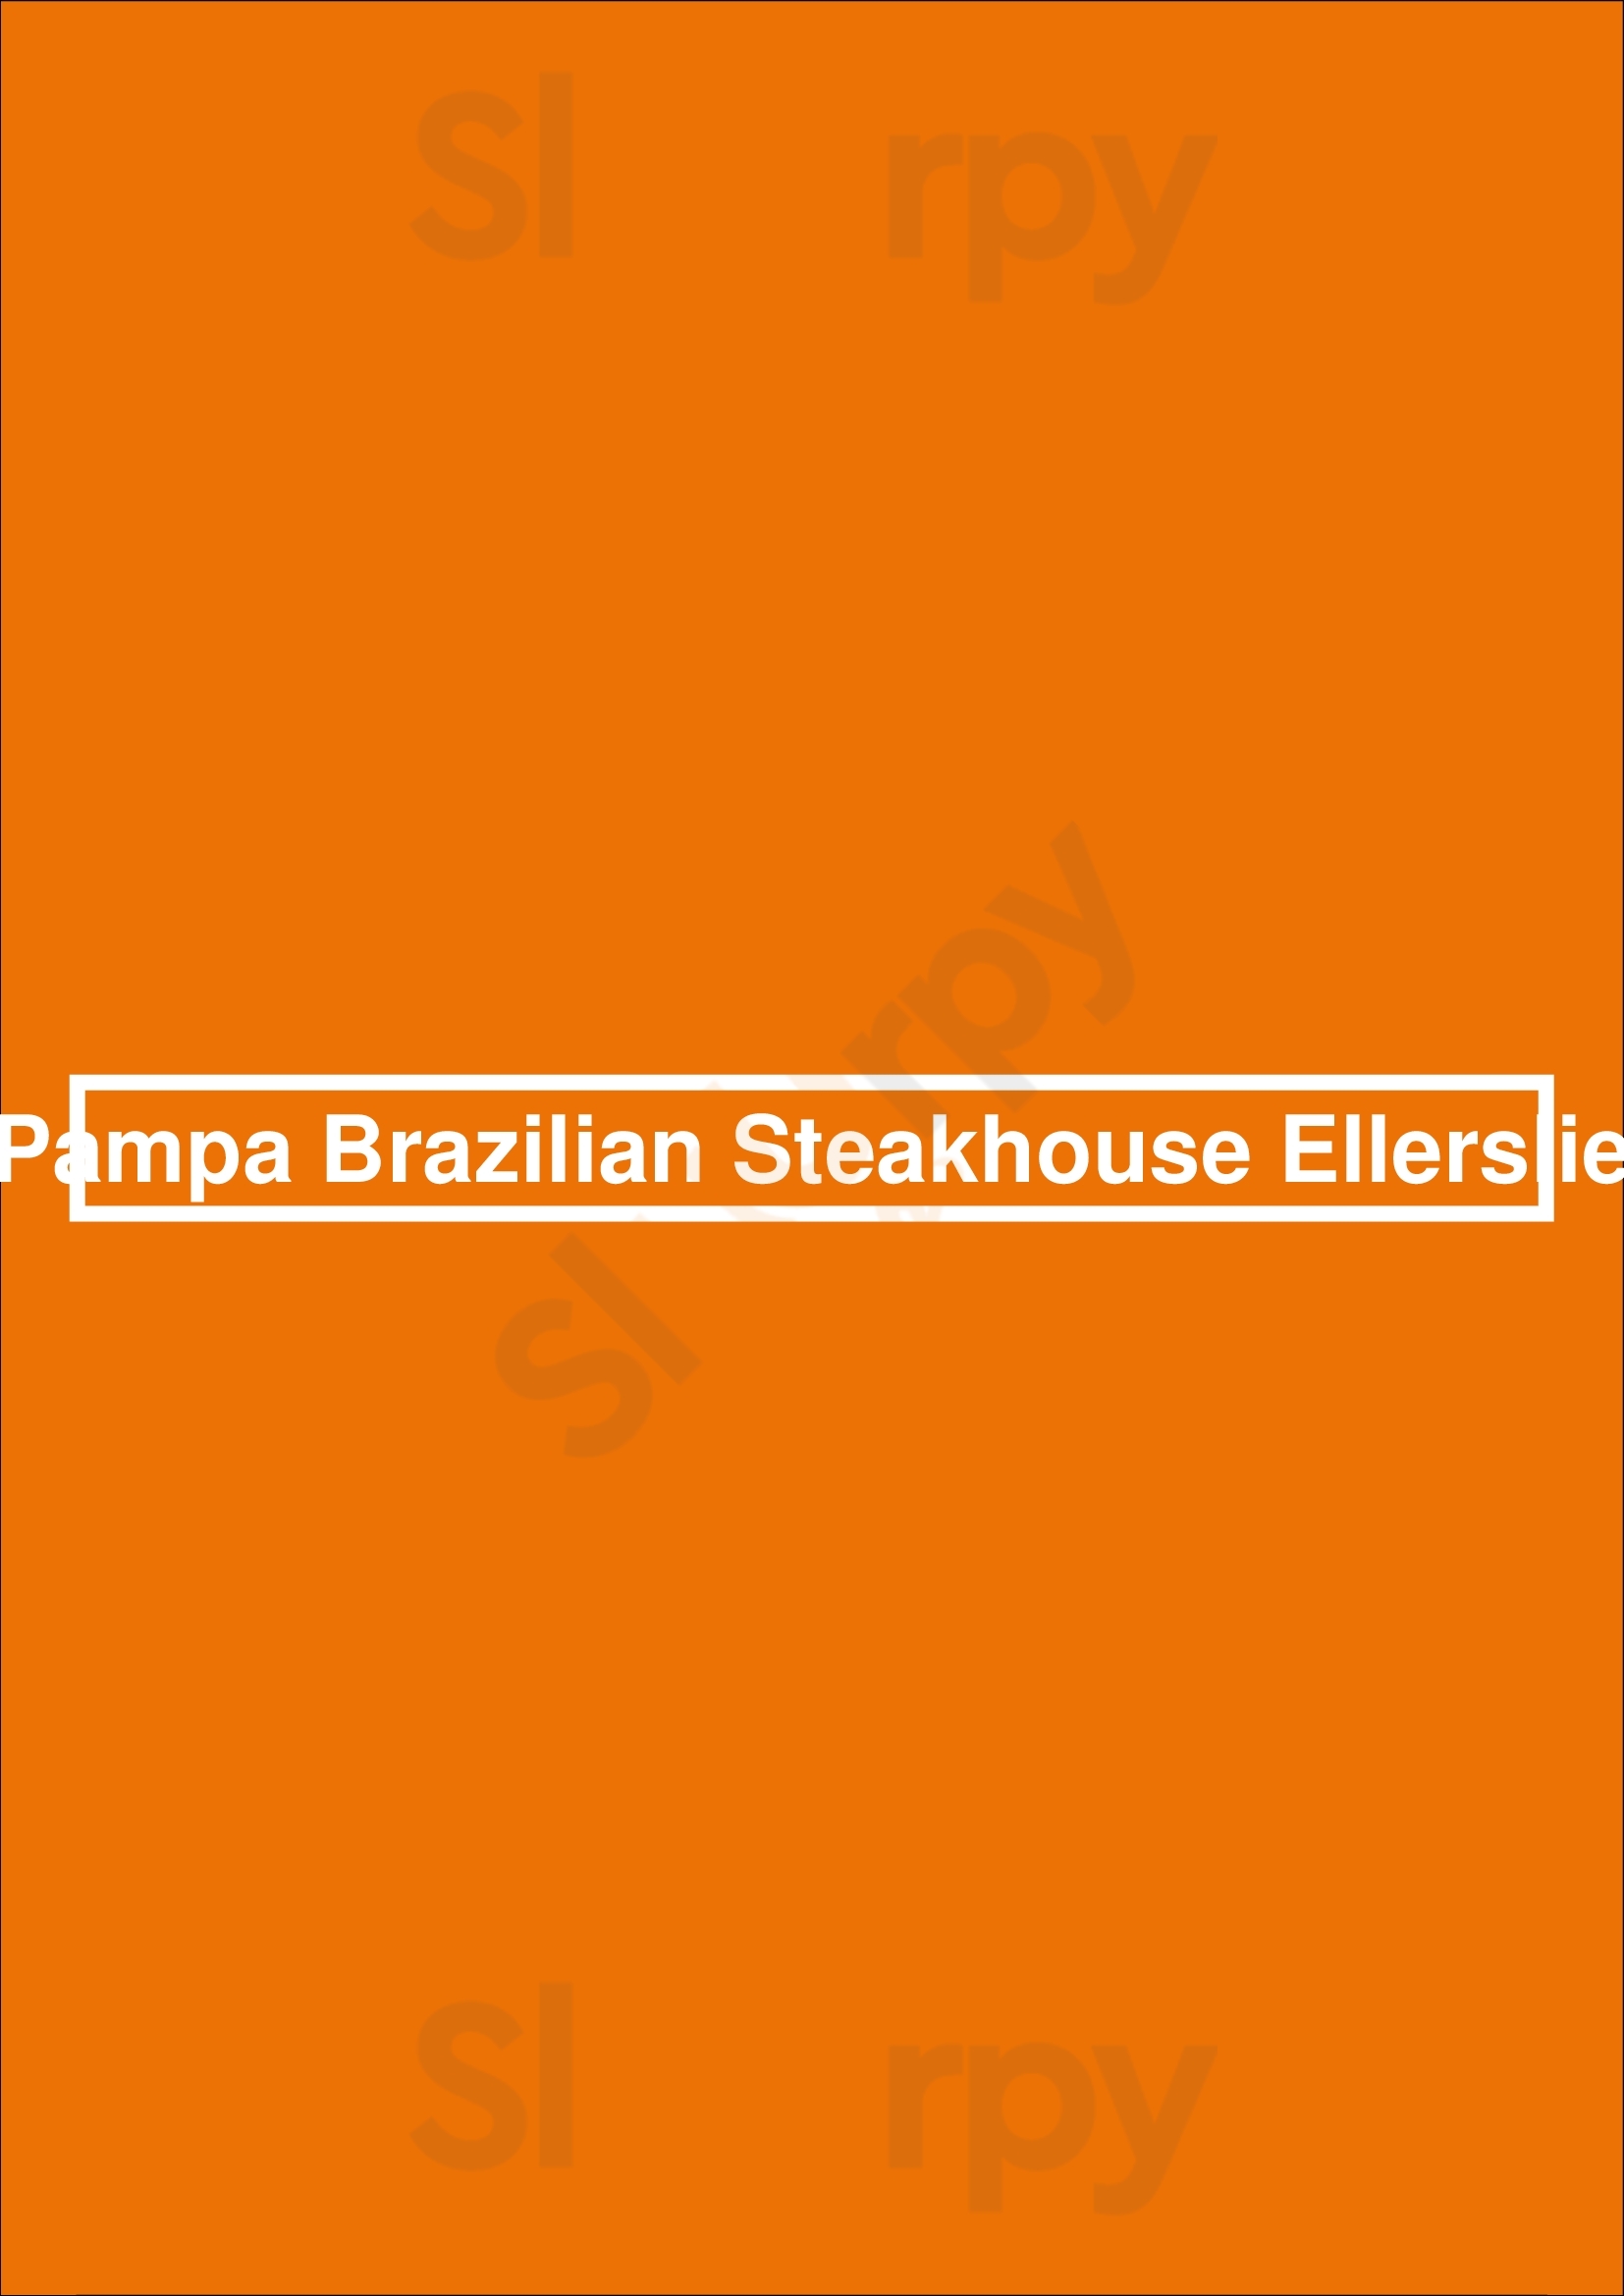 Pampa Brazilian Steakhouse Edmonton Menu - 1